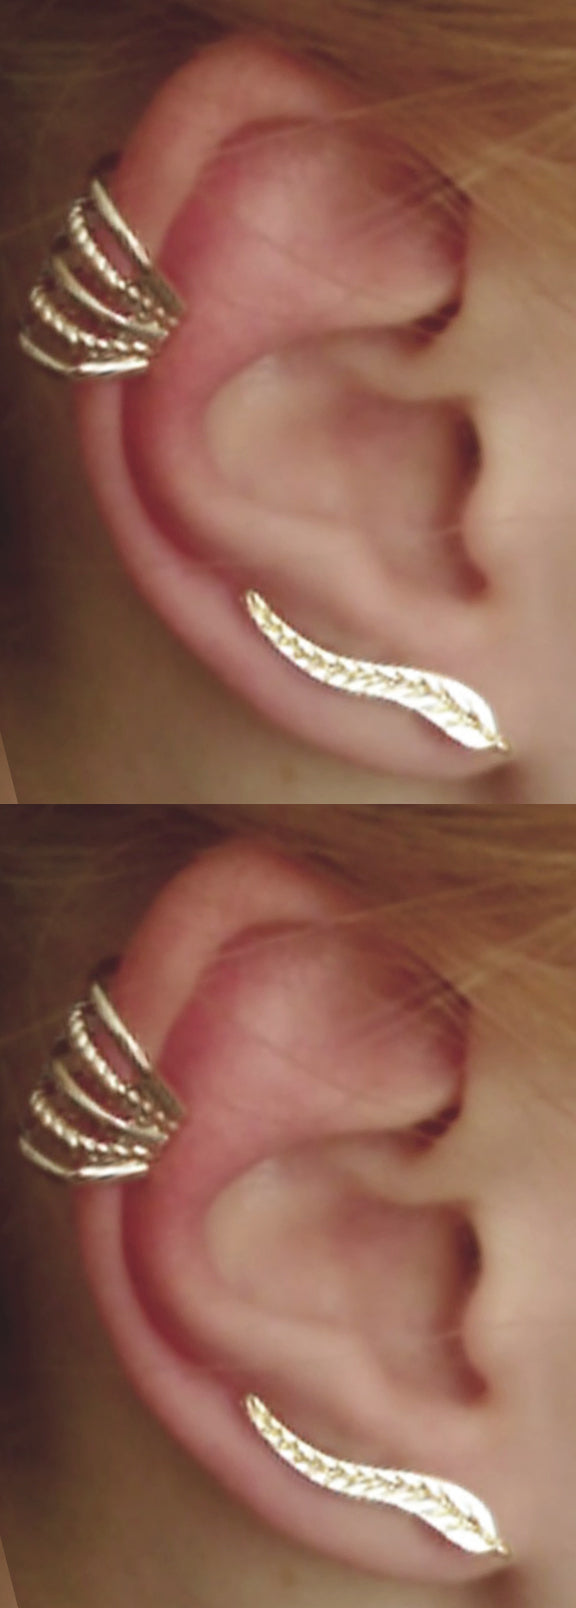 Rose Gold Ear Piercing Ideas at MyBodiArt.com - Triple Cartilage Helix Earring Cuff Ring - Leaf Ear Climber  